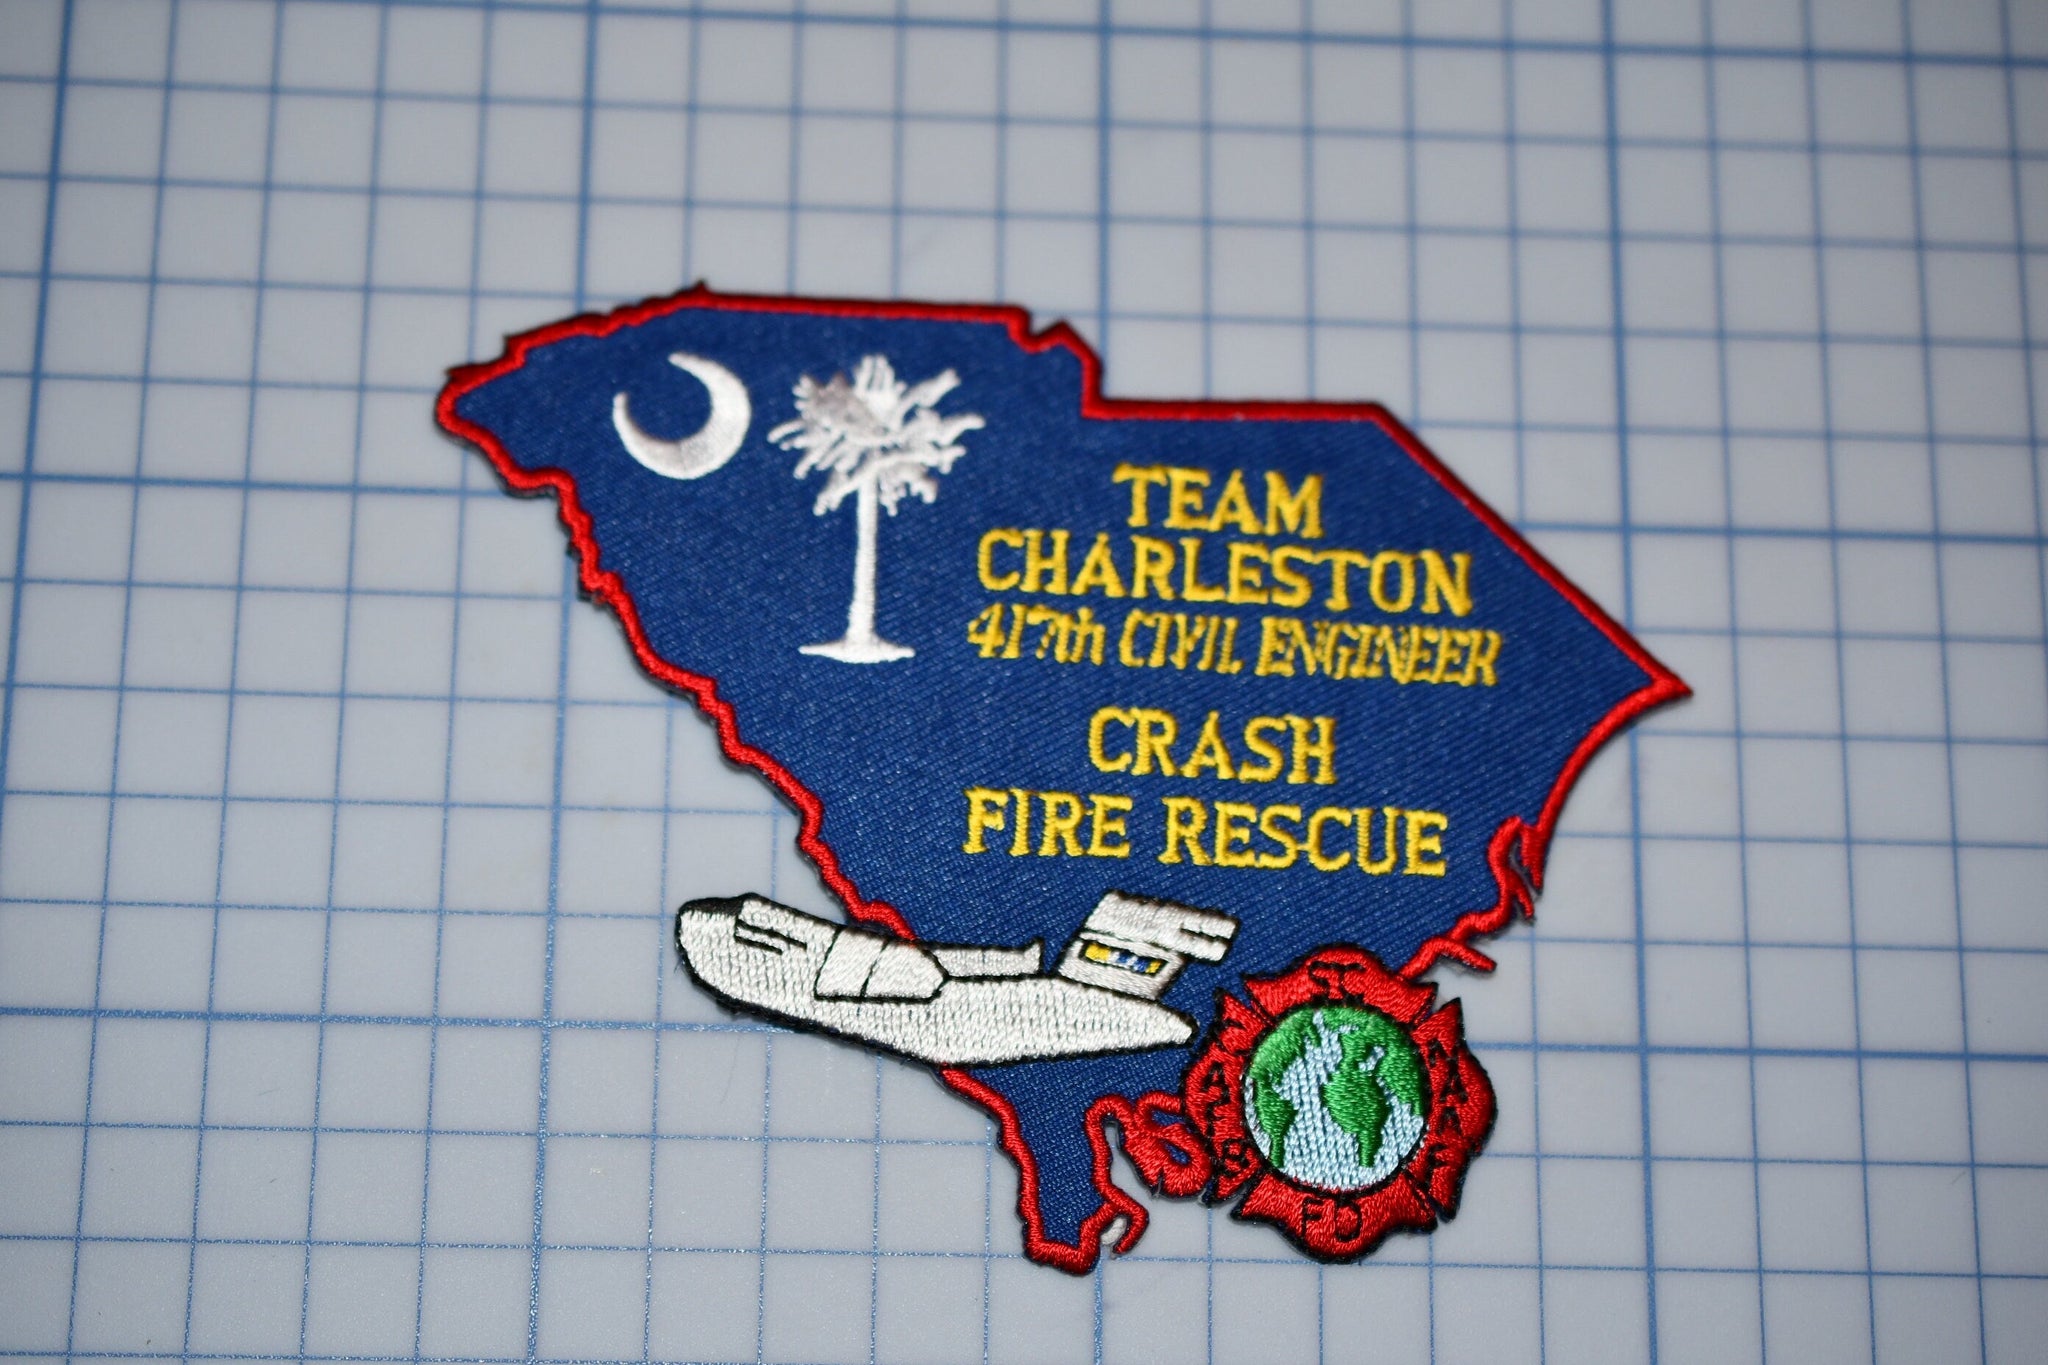 Team Charleston 417th Civil Engineer Crash Fire Rescue Patch (B28-318)